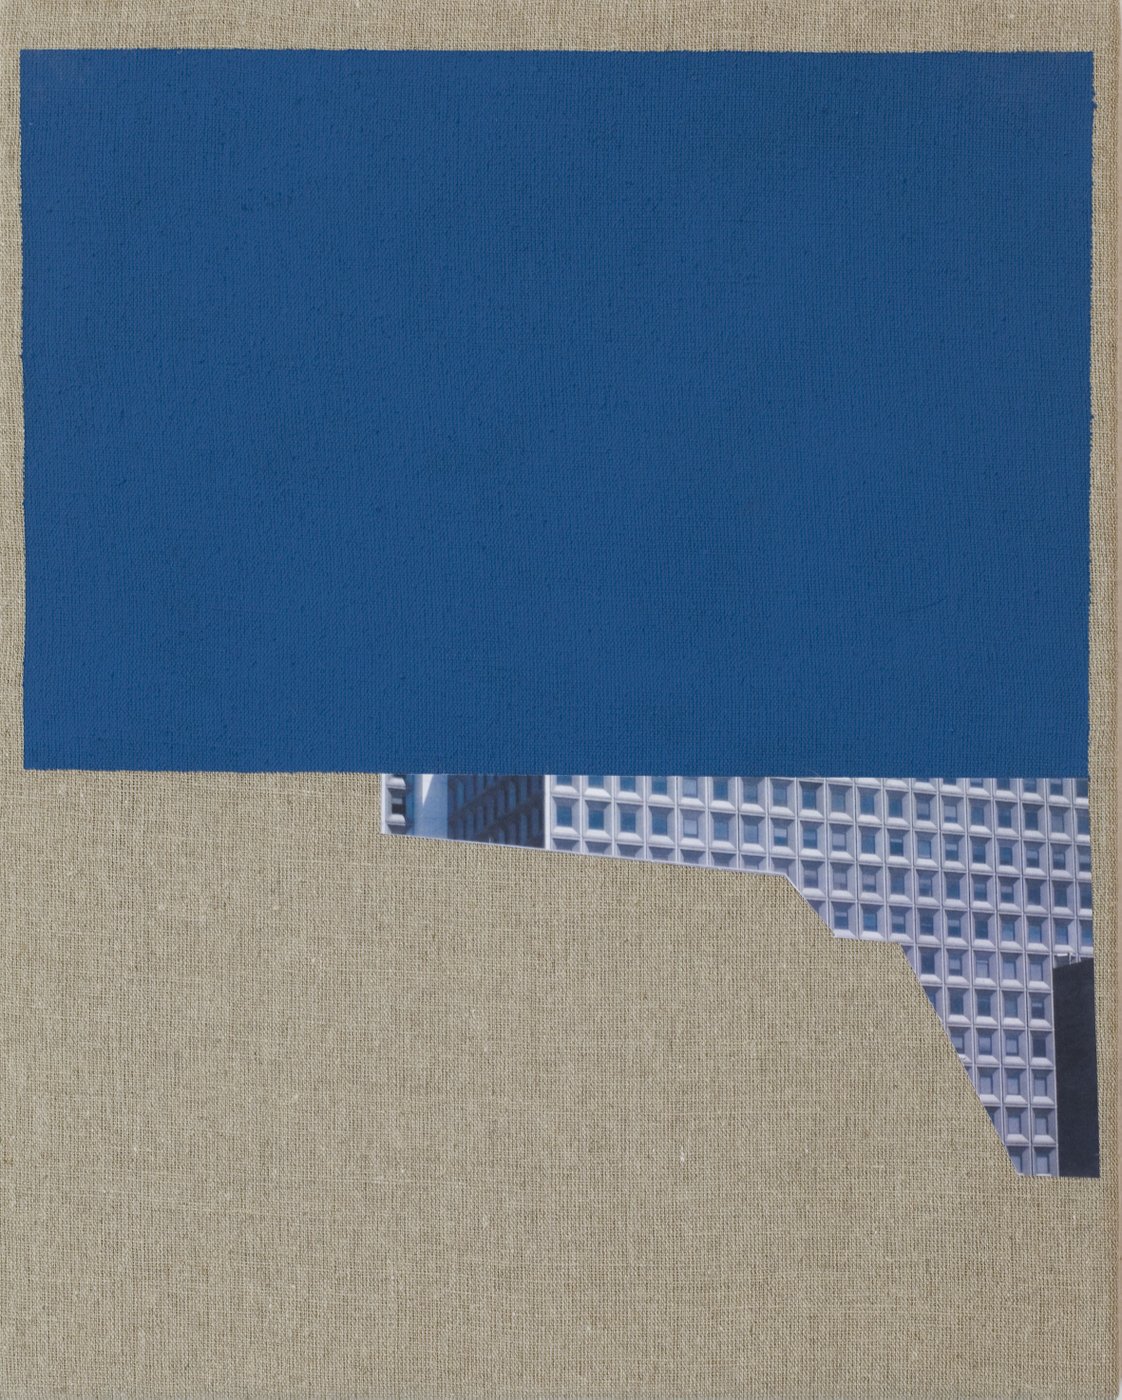 
   Jörg Reissner, n.y. blues 2011
   
   Acryl, Farbdruck auf Papier, Leinwand
   
   50 x 40 cm
  
